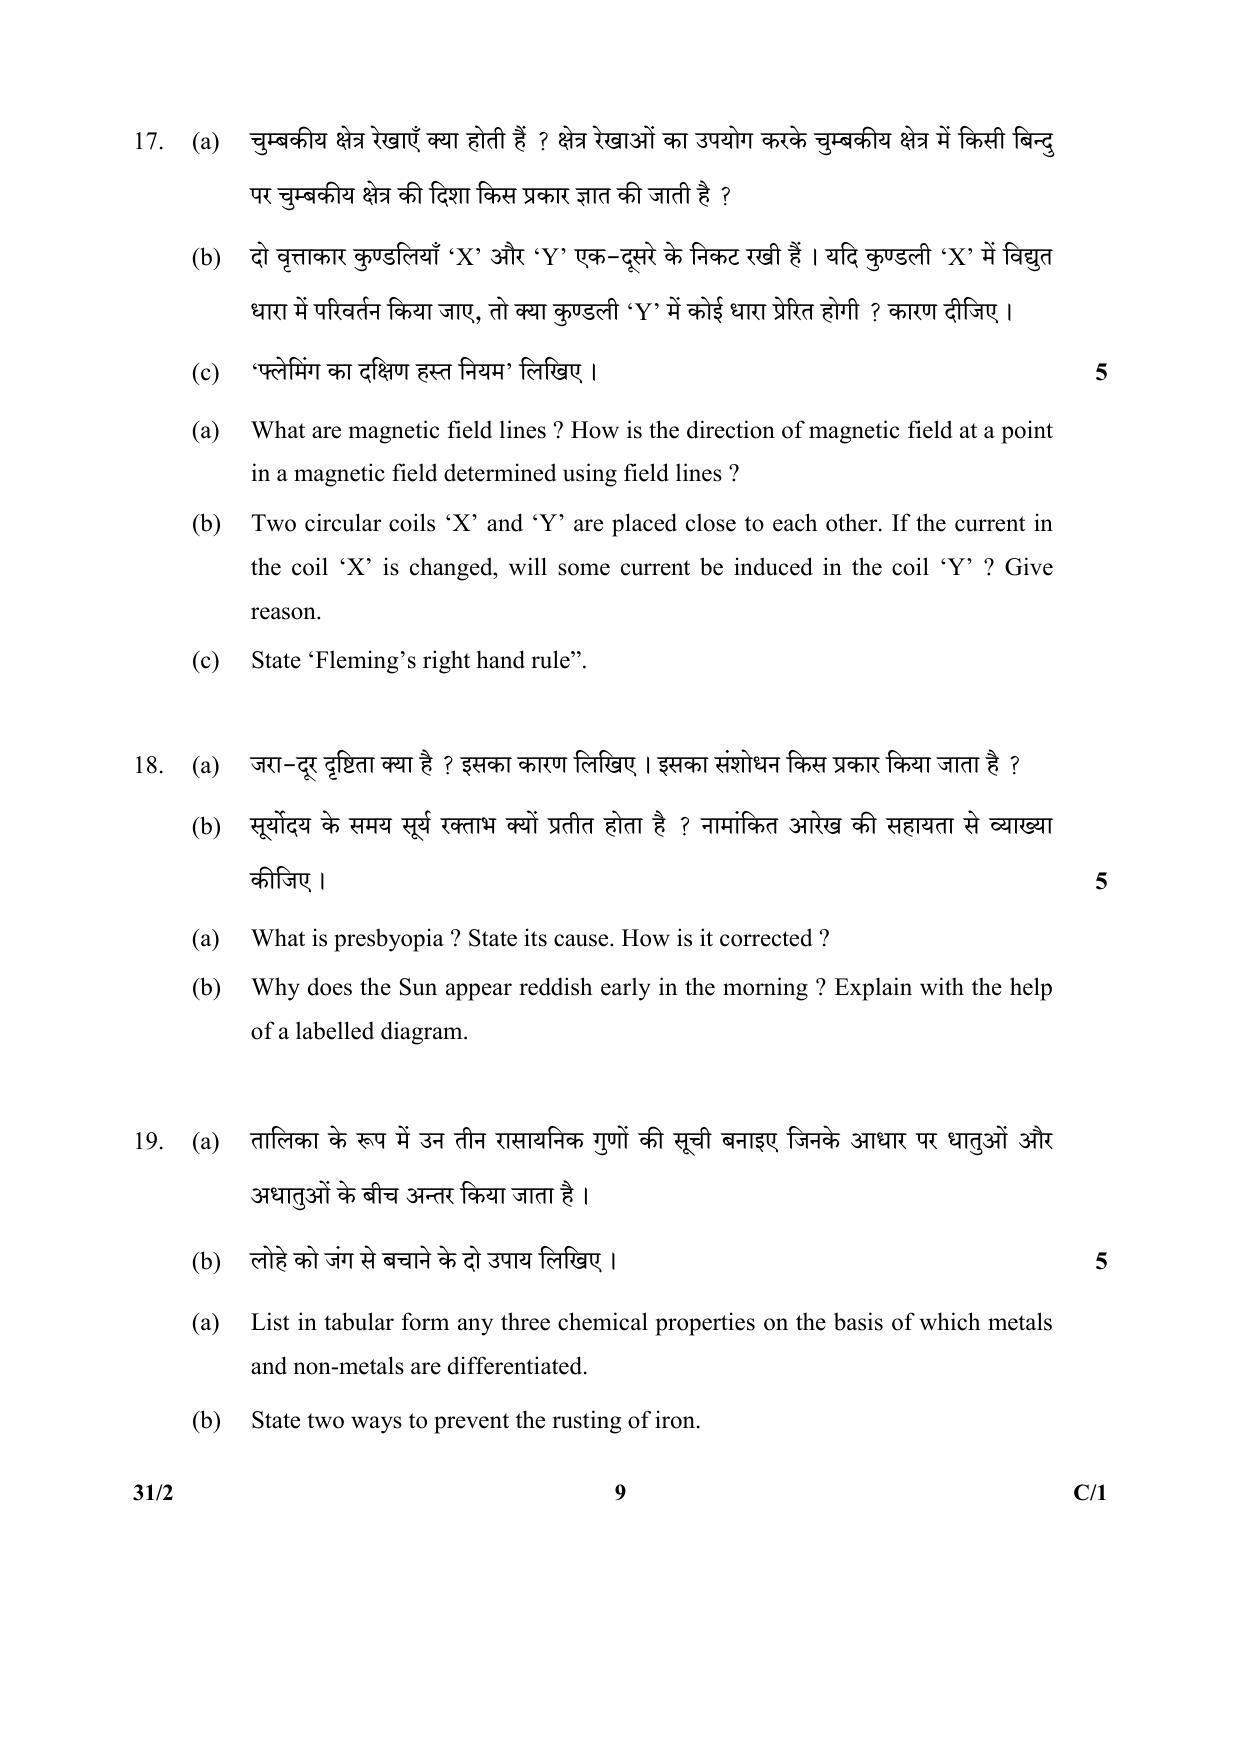 CBSE Class 10 41-2 Science PUNJABI VERSION 2018 Compartment Question Paper - Page 17